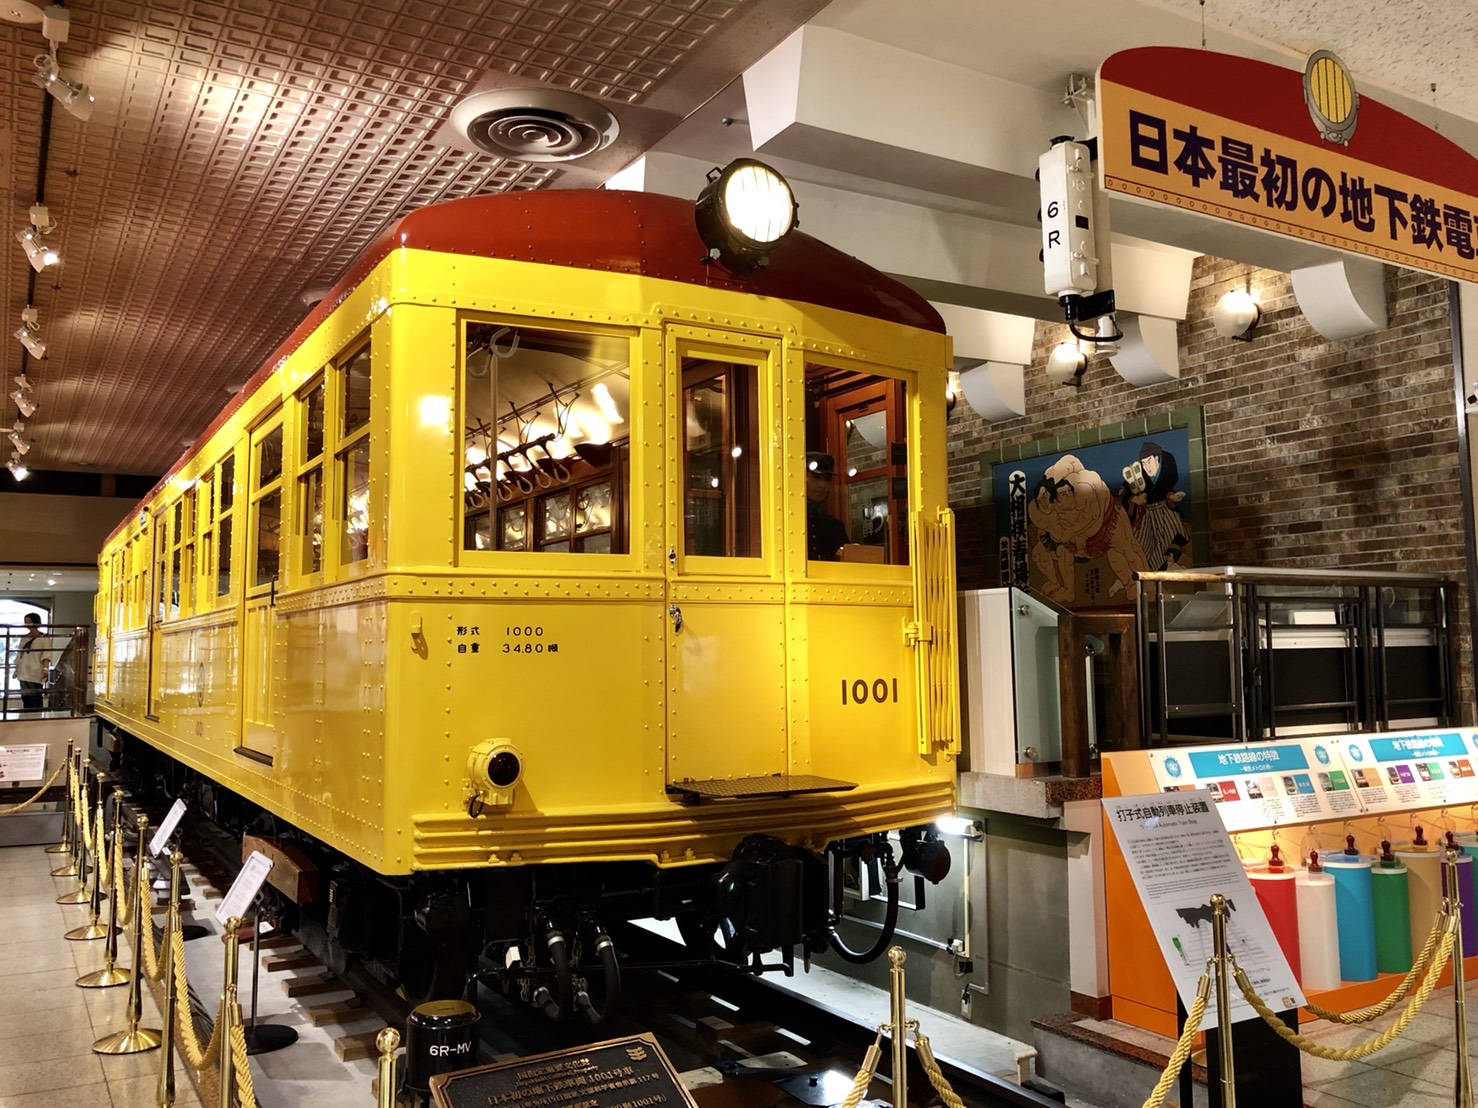 日本初の地下鉄車両 1001号車